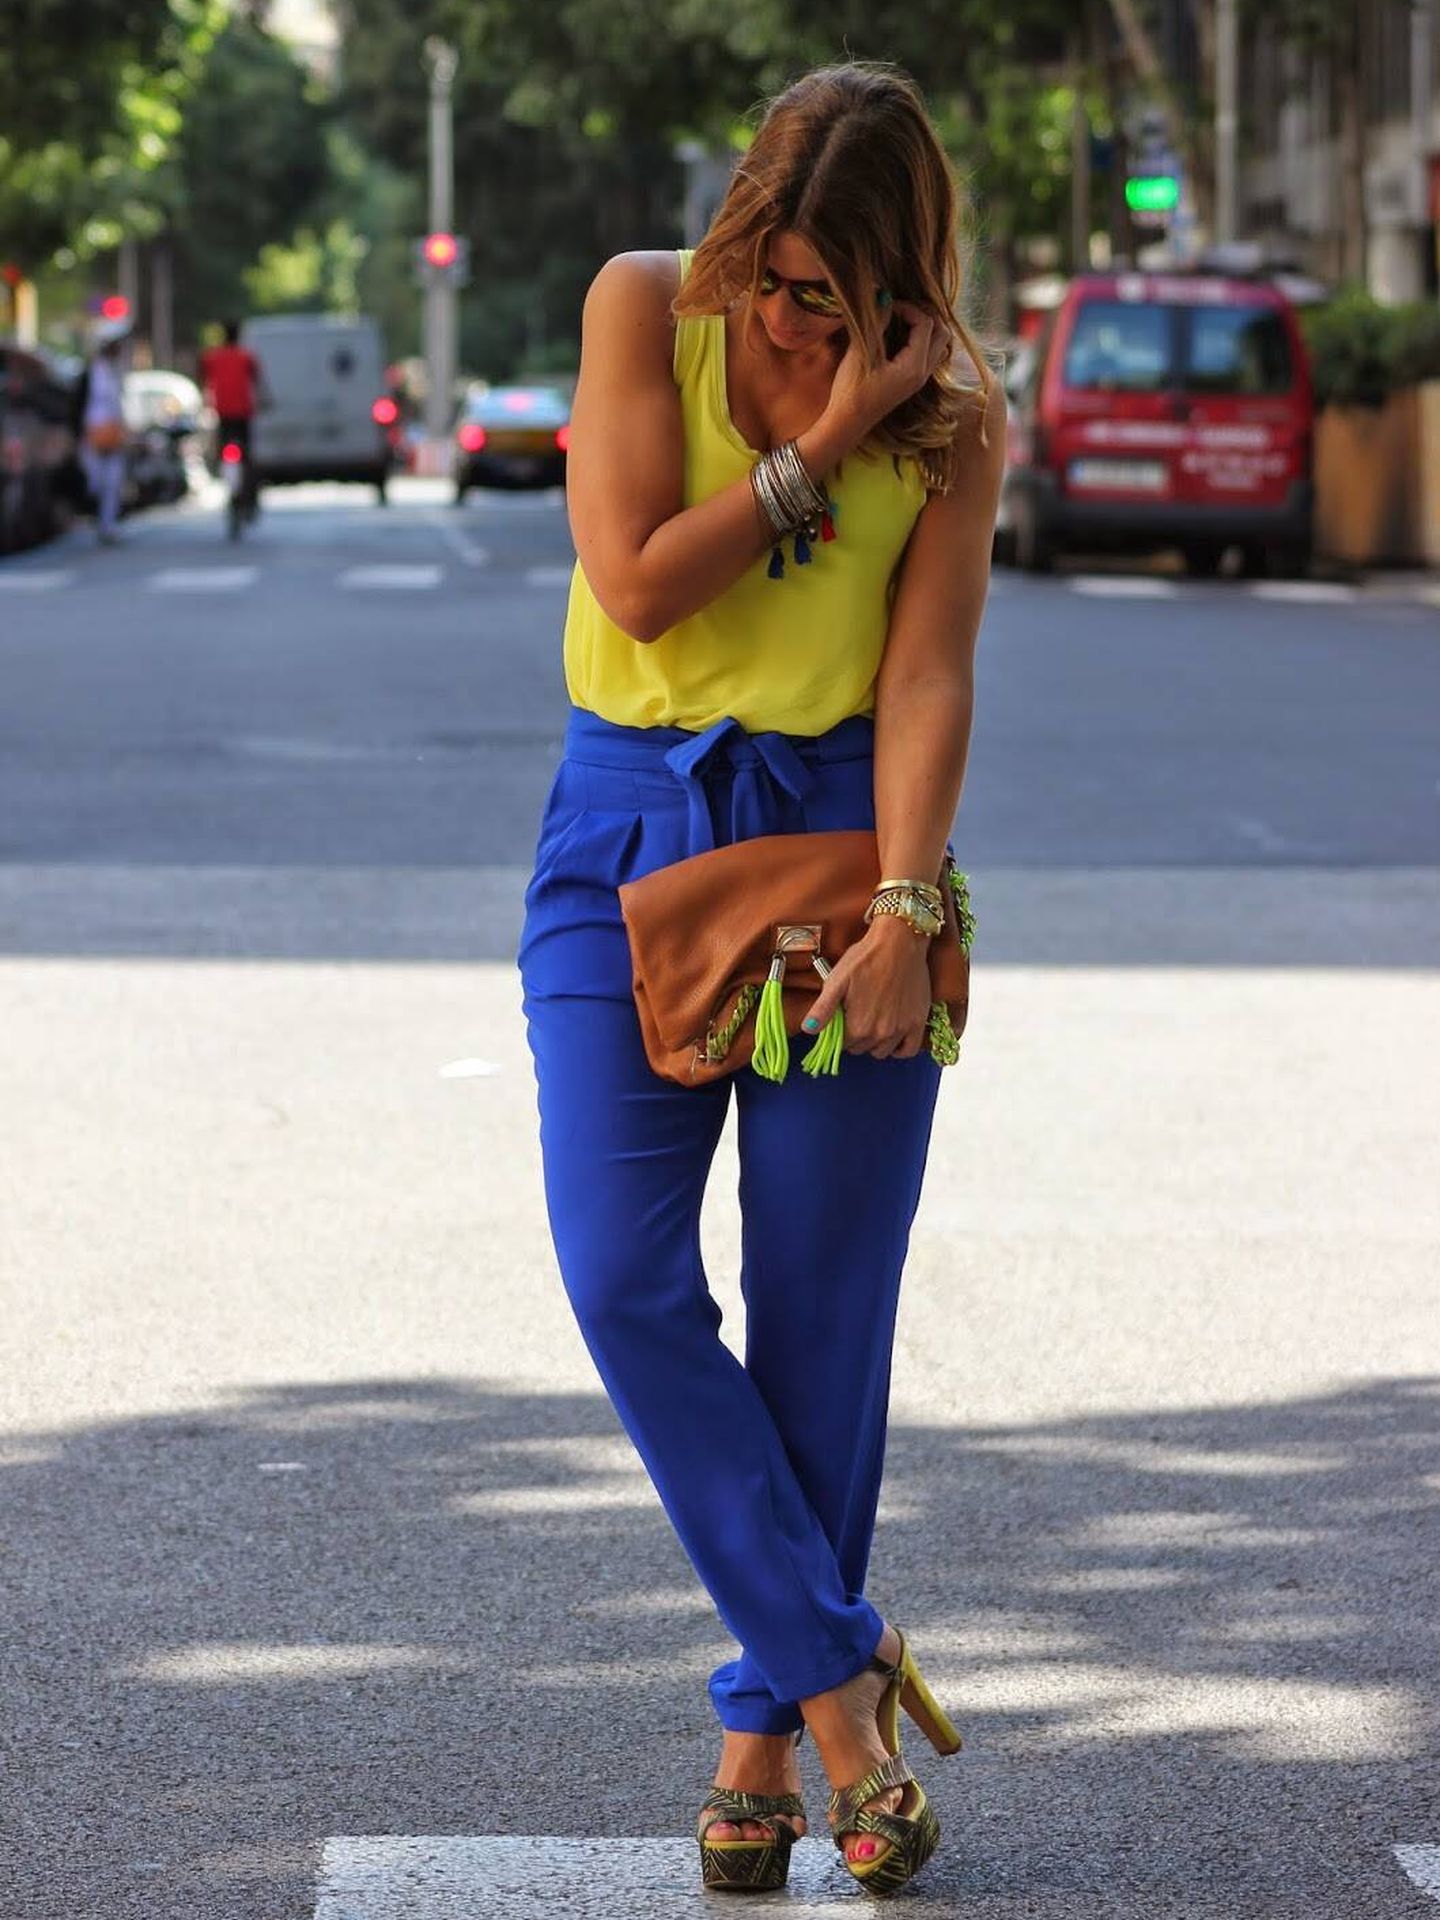 La bloguera Miss Trendy Barcelona con look en azul klein y amarillo. (Instagram @misstrendybcn)